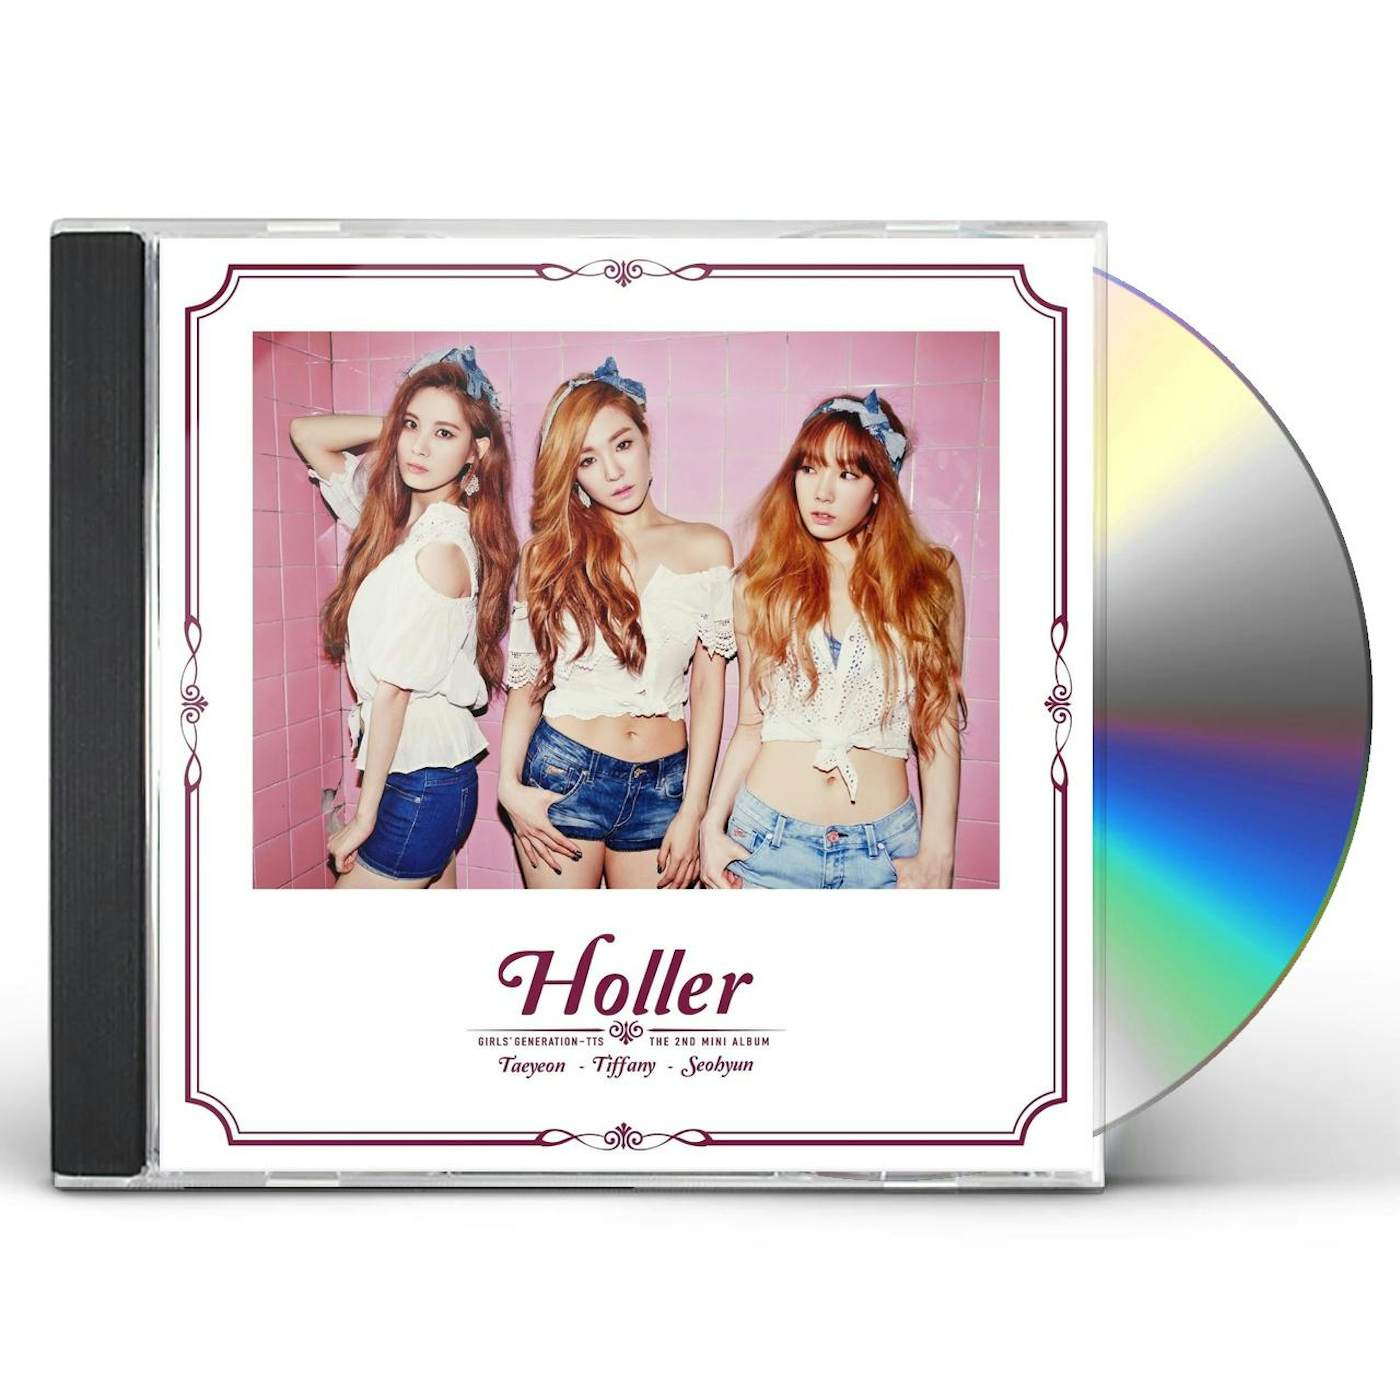 Girls' Generation HOLLER (2ND MINI ALBUM) CD